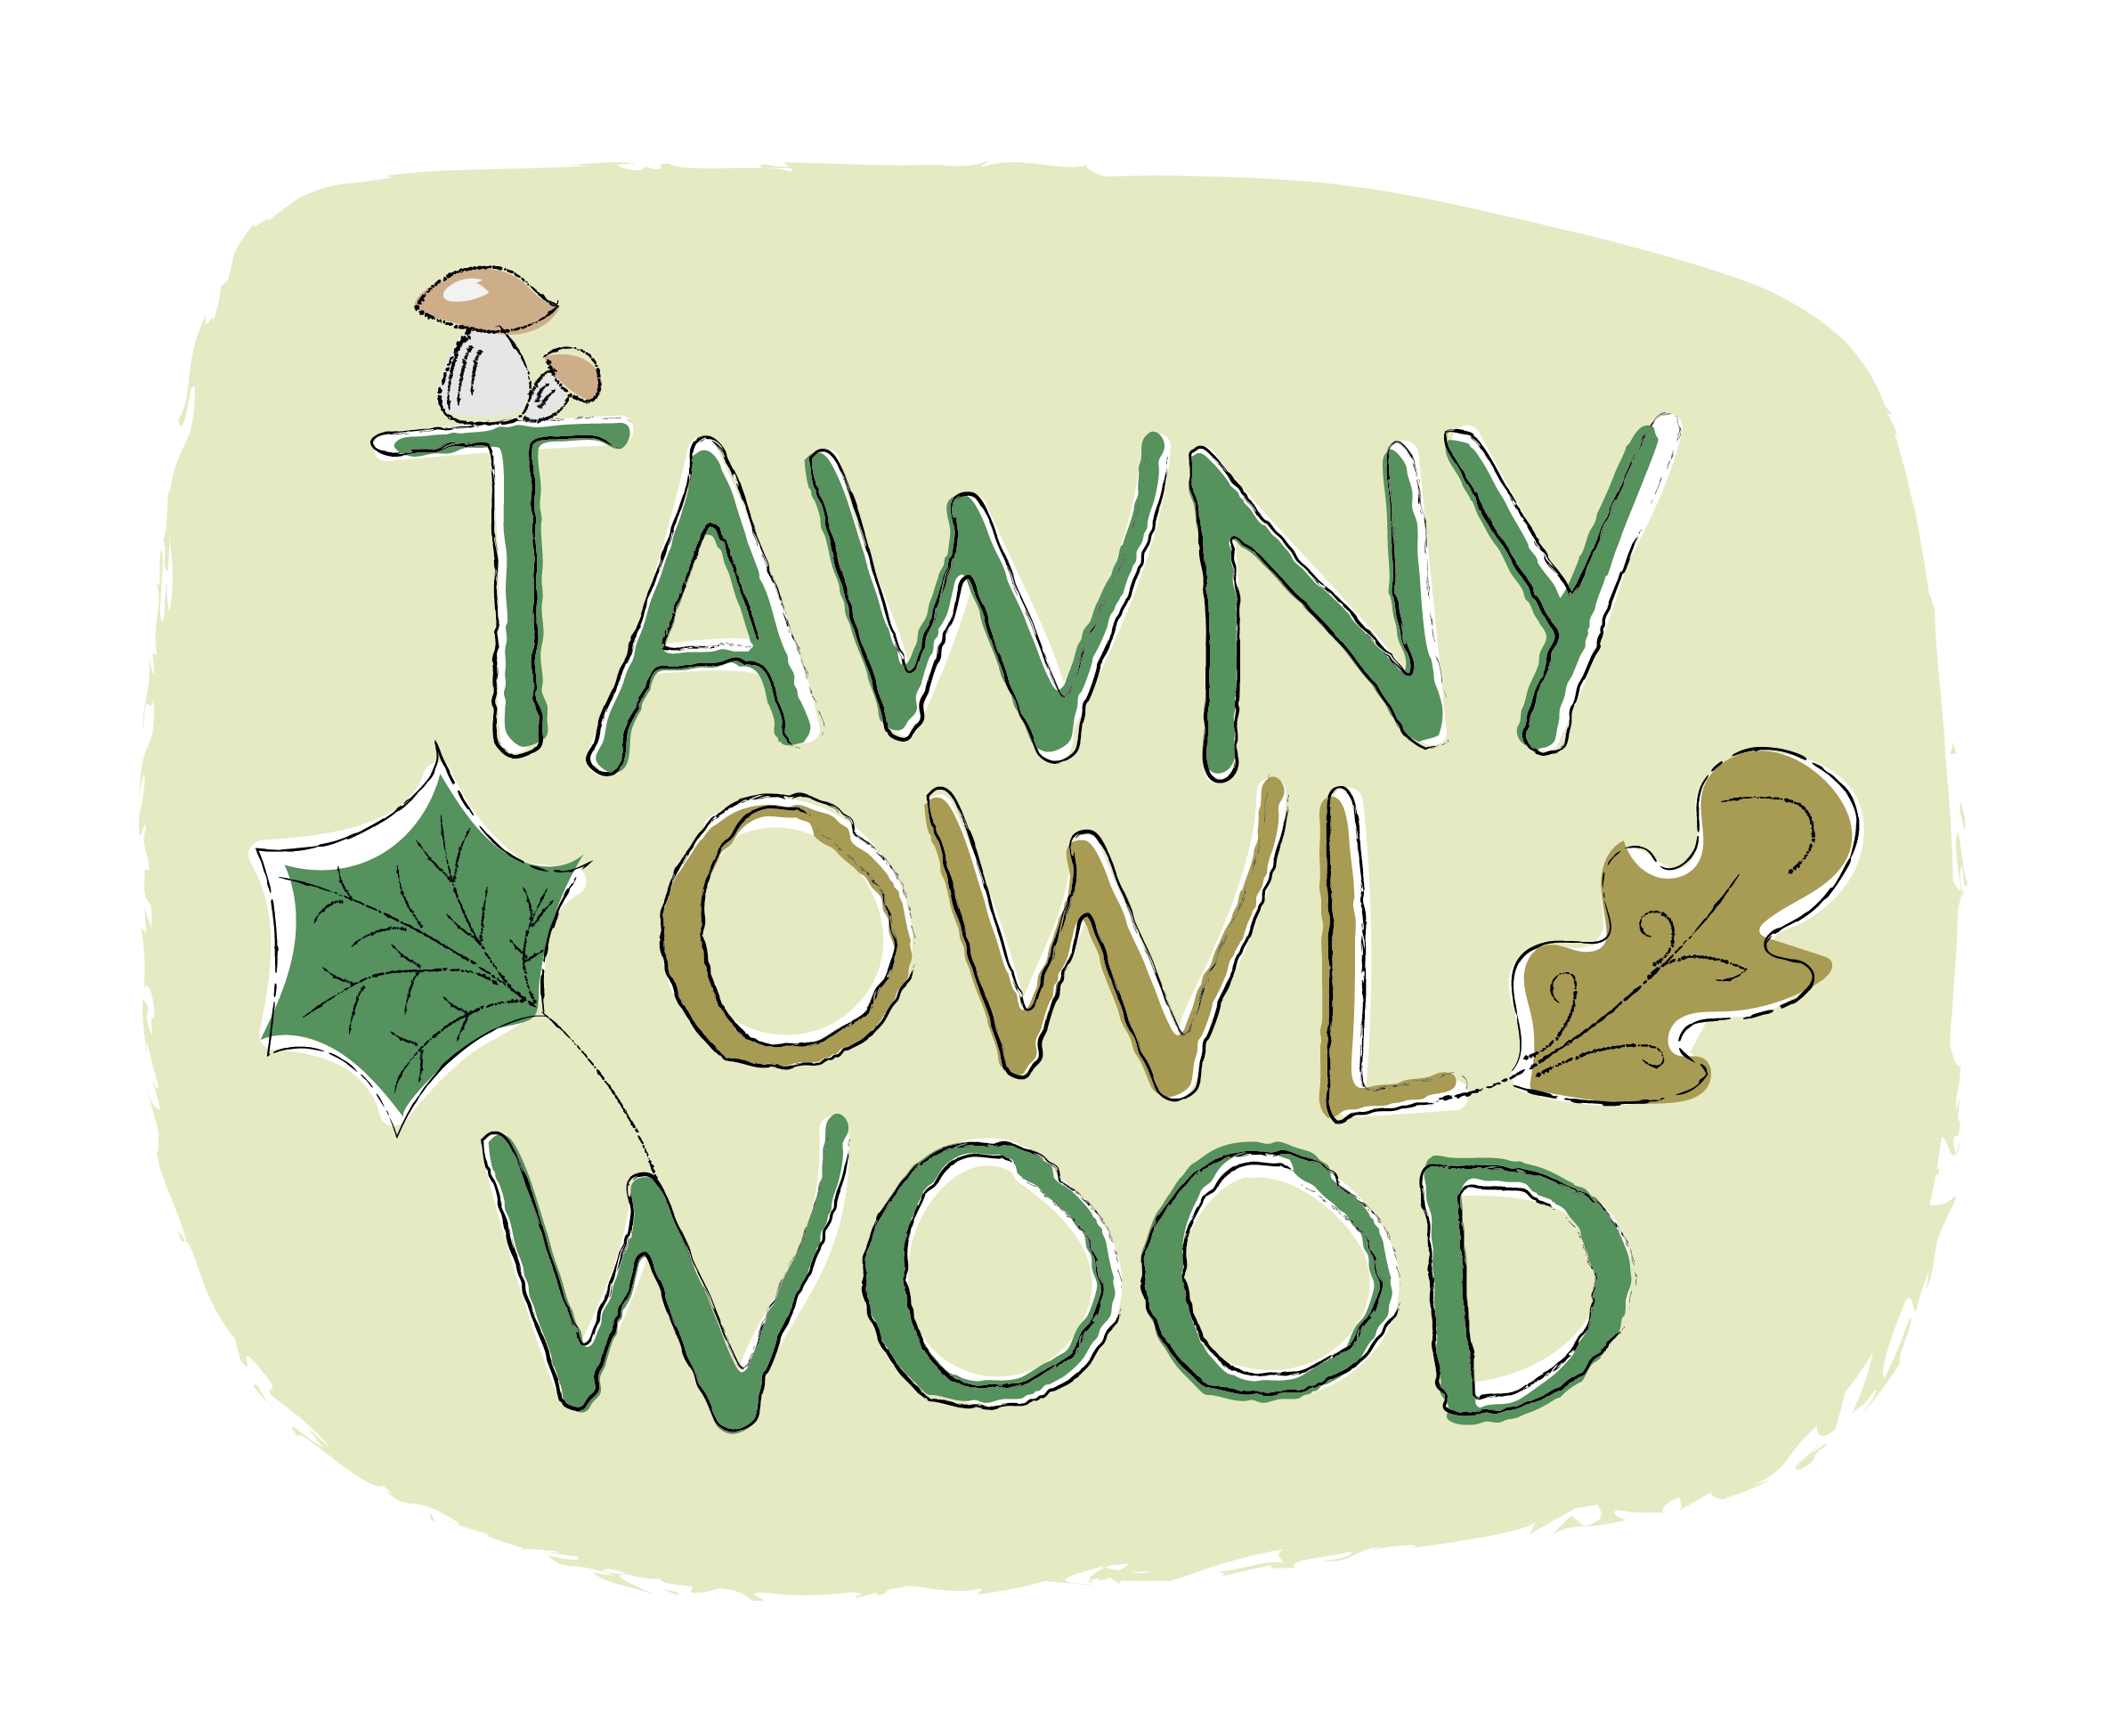 Tawny Owl Wood